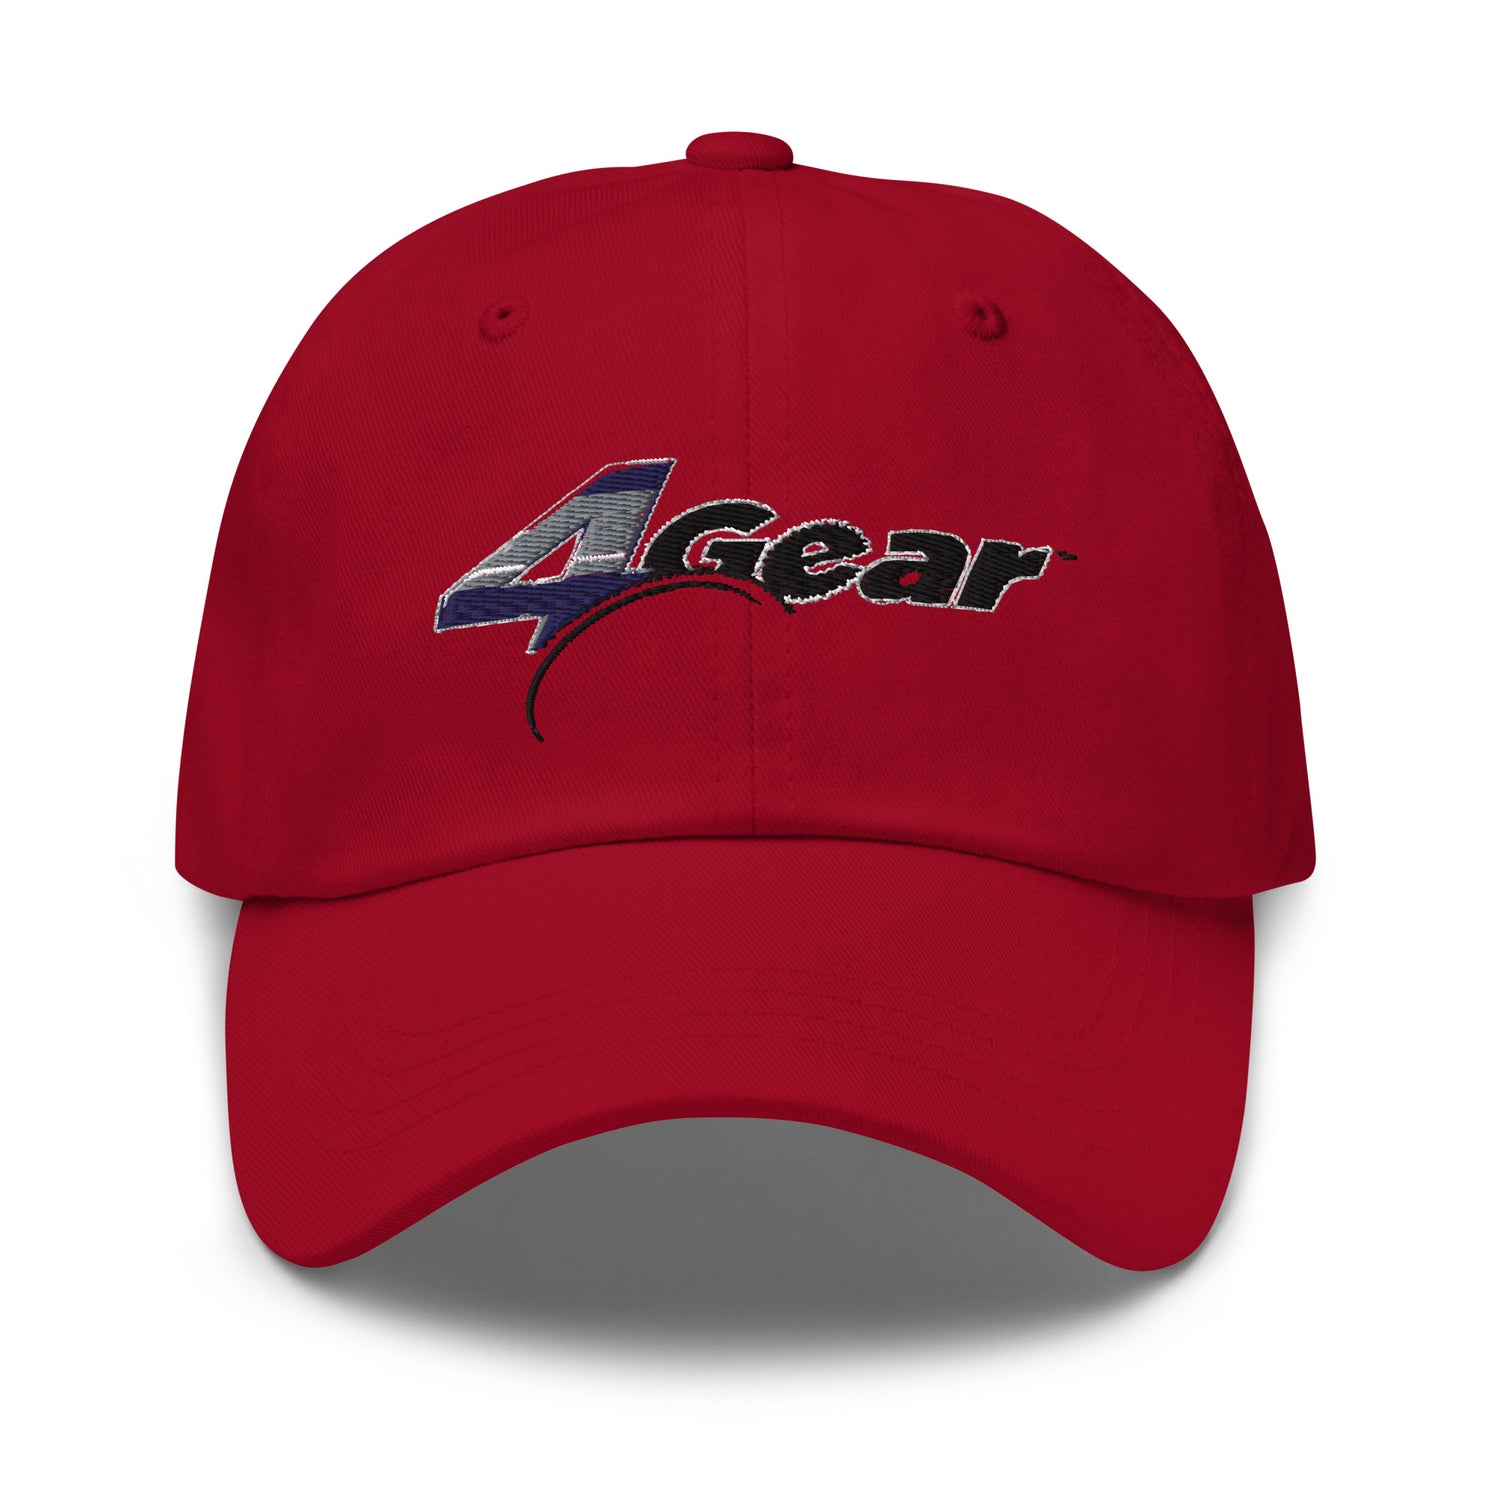 4GEAR Low Profile Ballcap